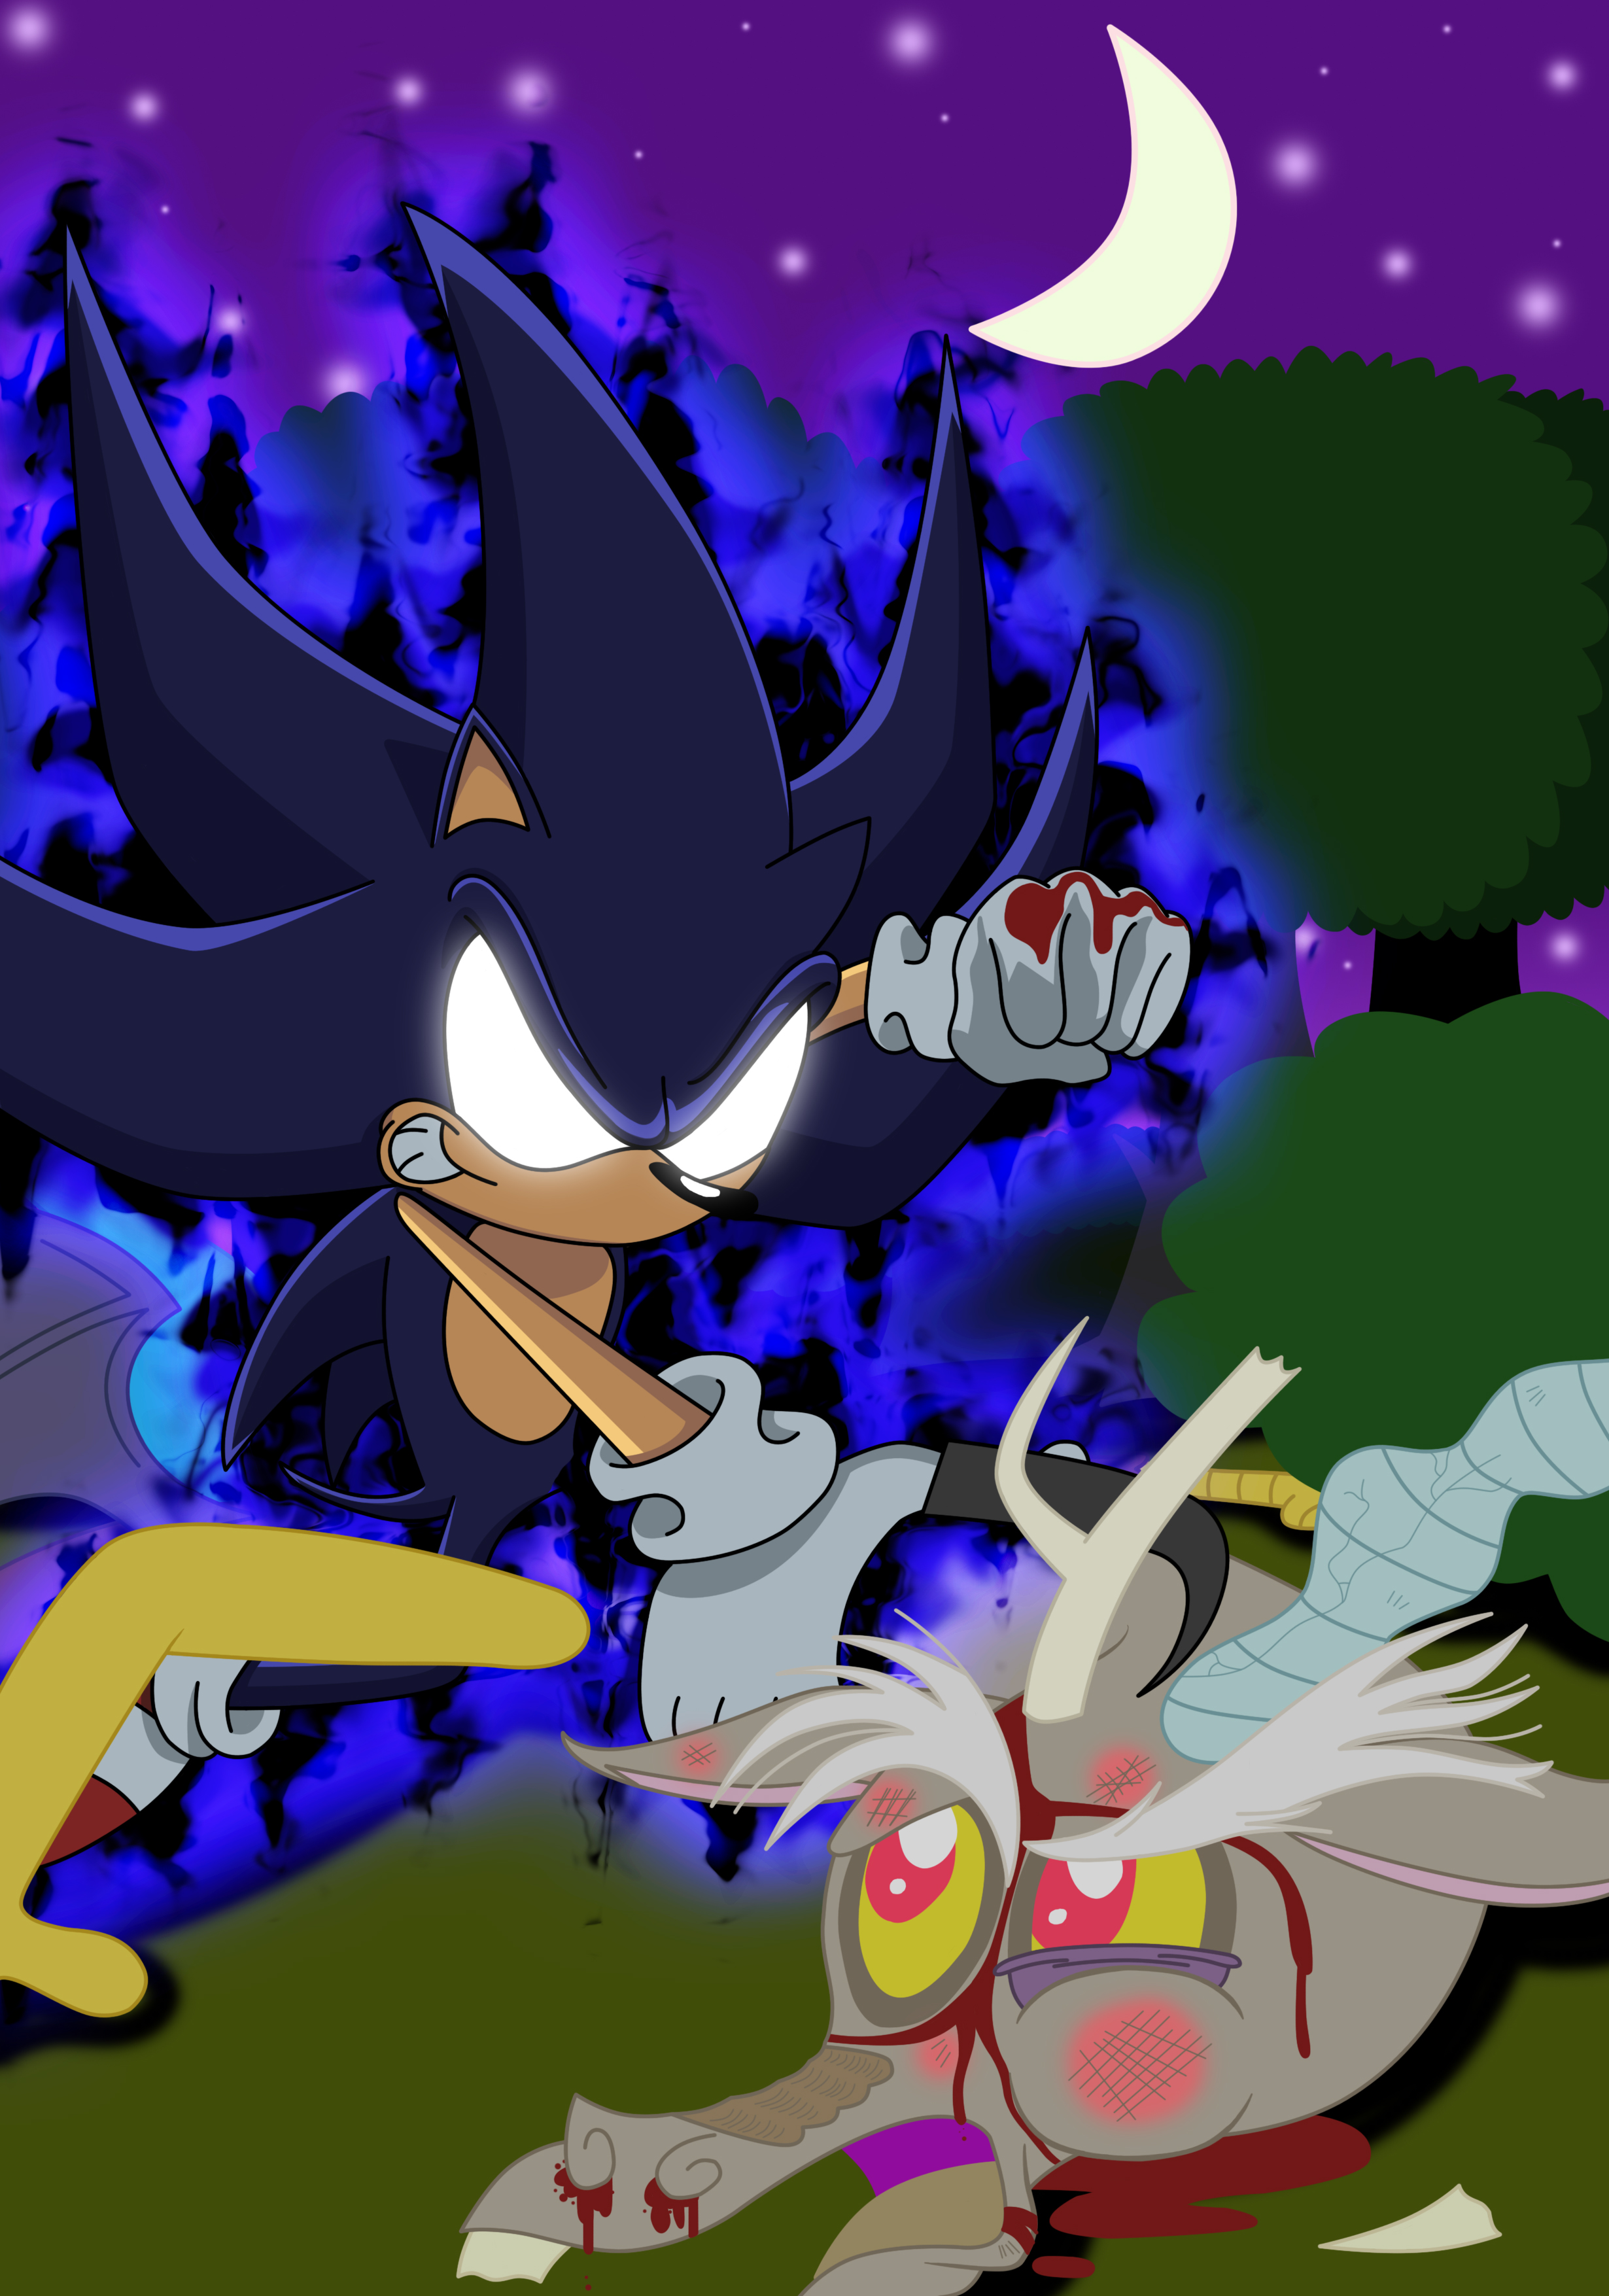 Dark Sonic vs Chaos Shadow